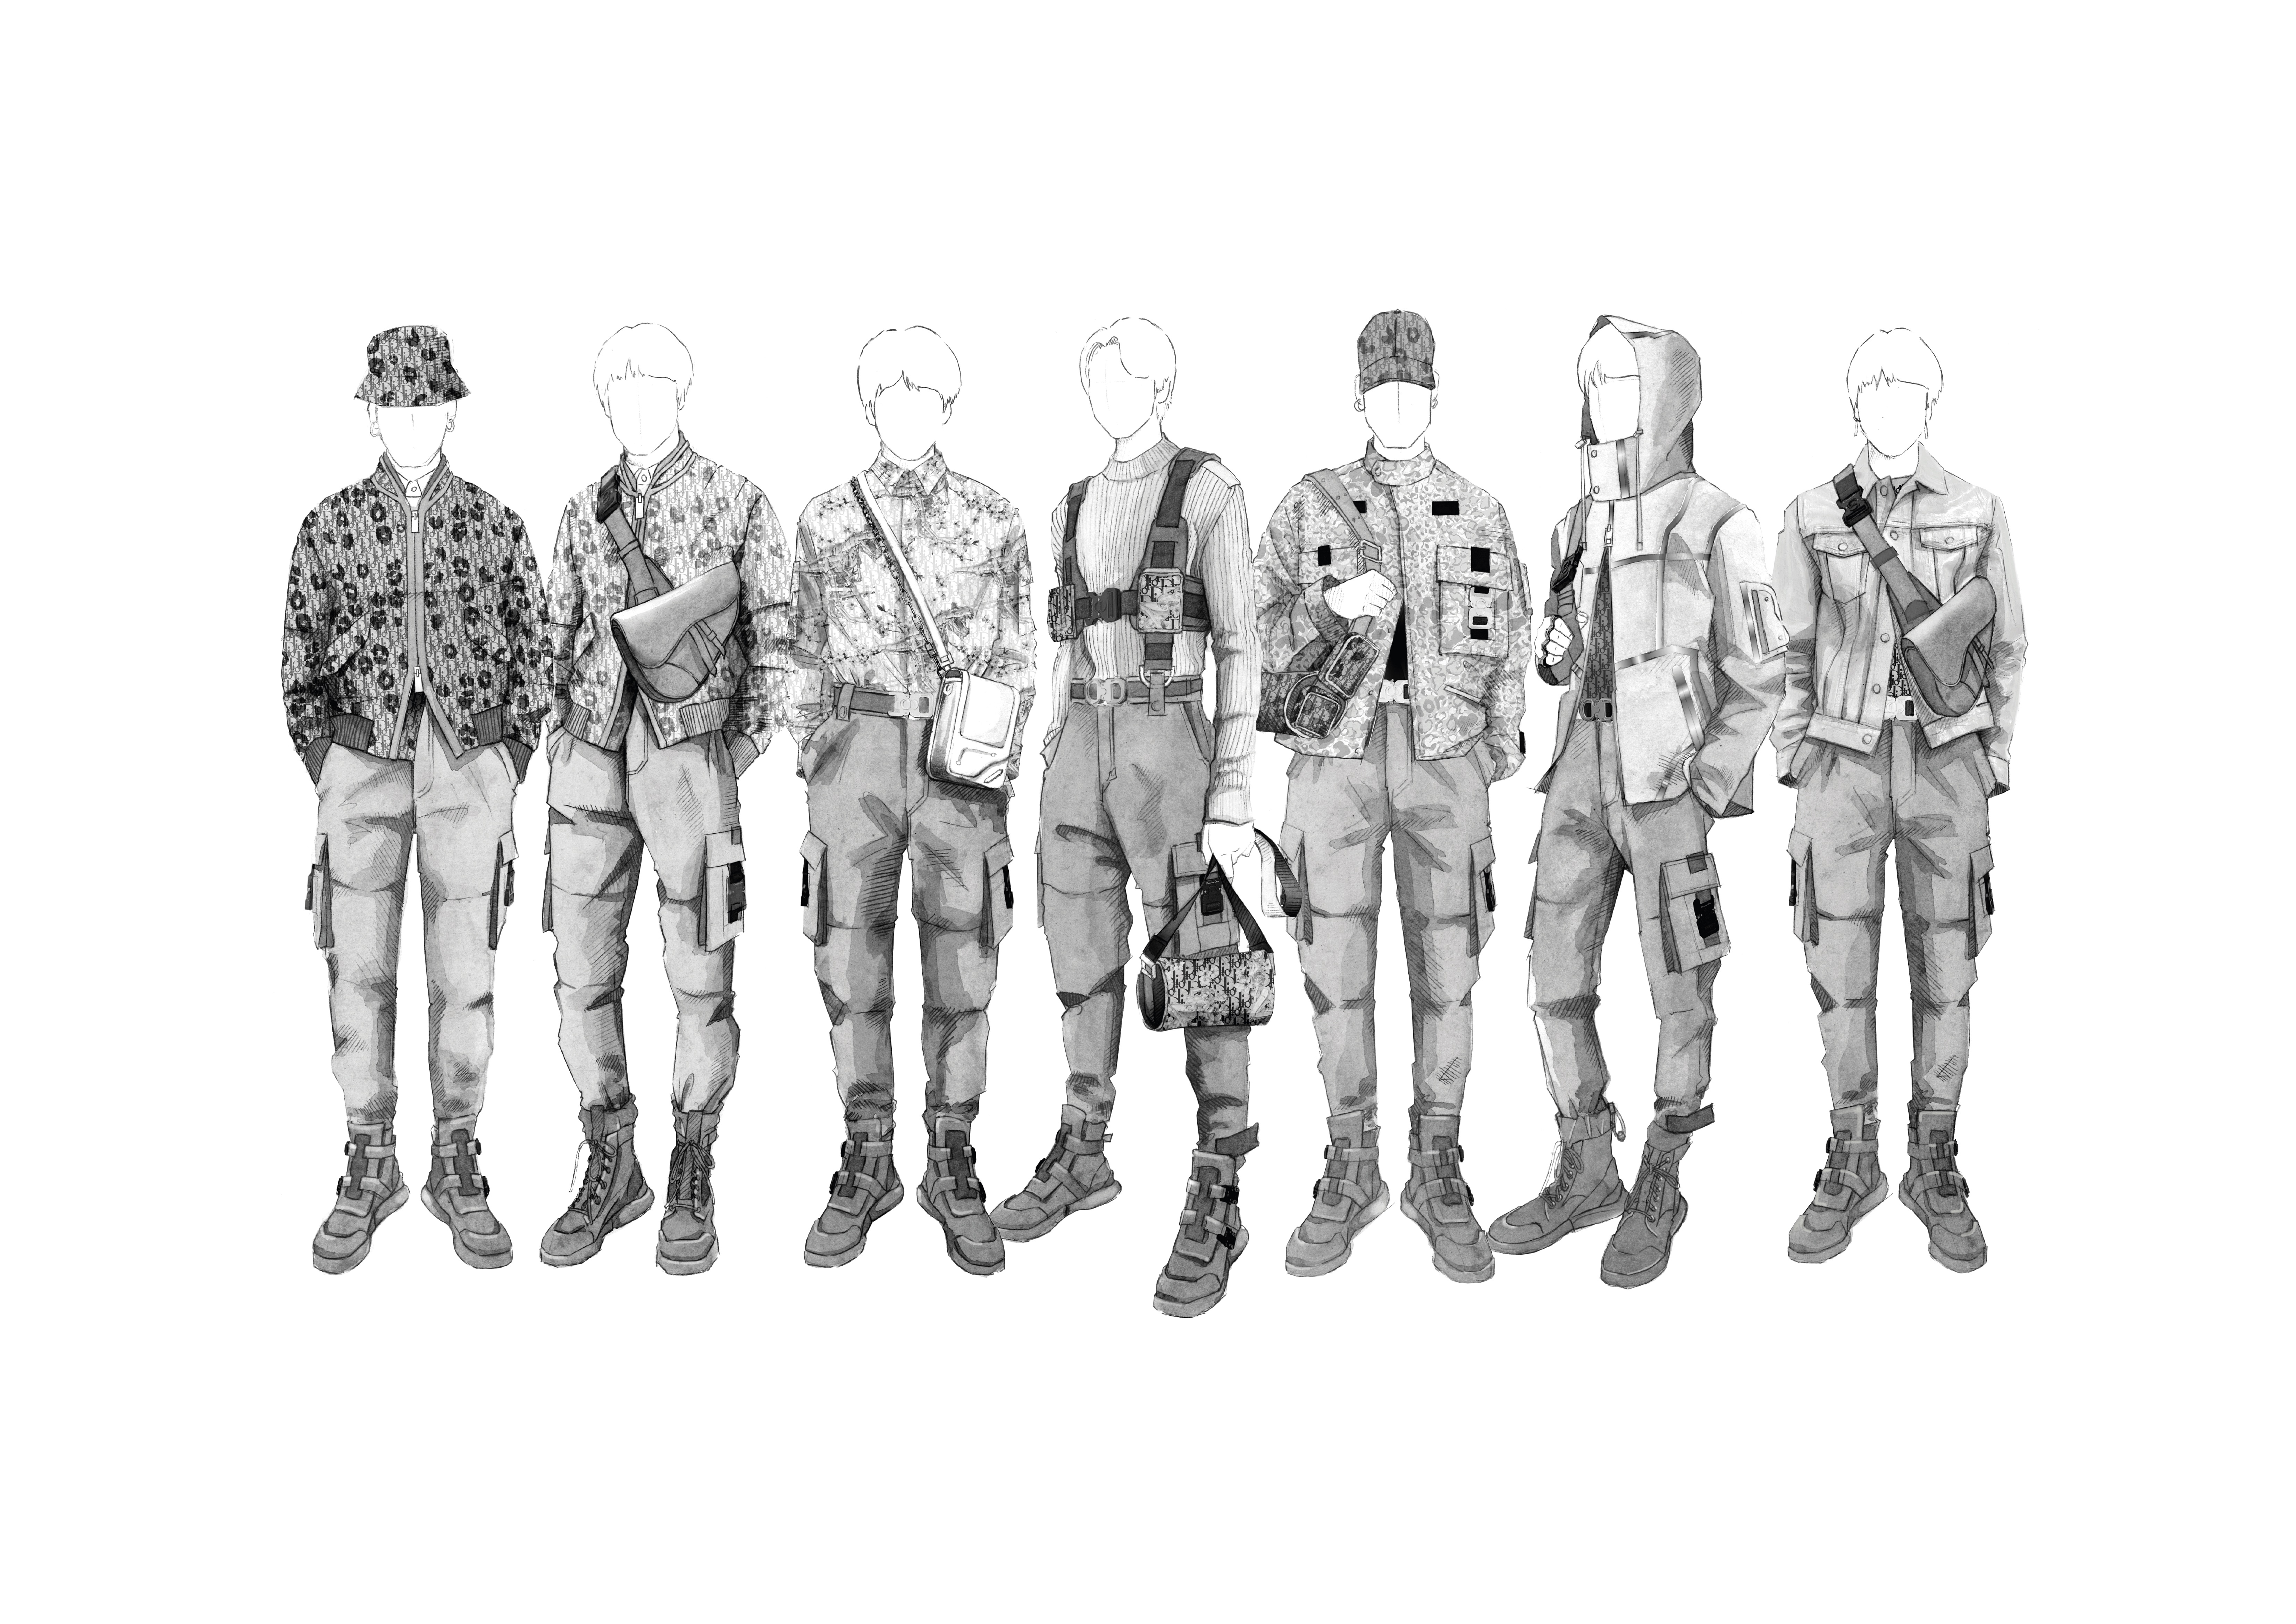 Dior キム ジョーンズがbts 防弾少年団 のワールドワイド スタジアムツアーステージ衣装をクリエーション クリスチャン ディオール株式会社 のプレスリリース